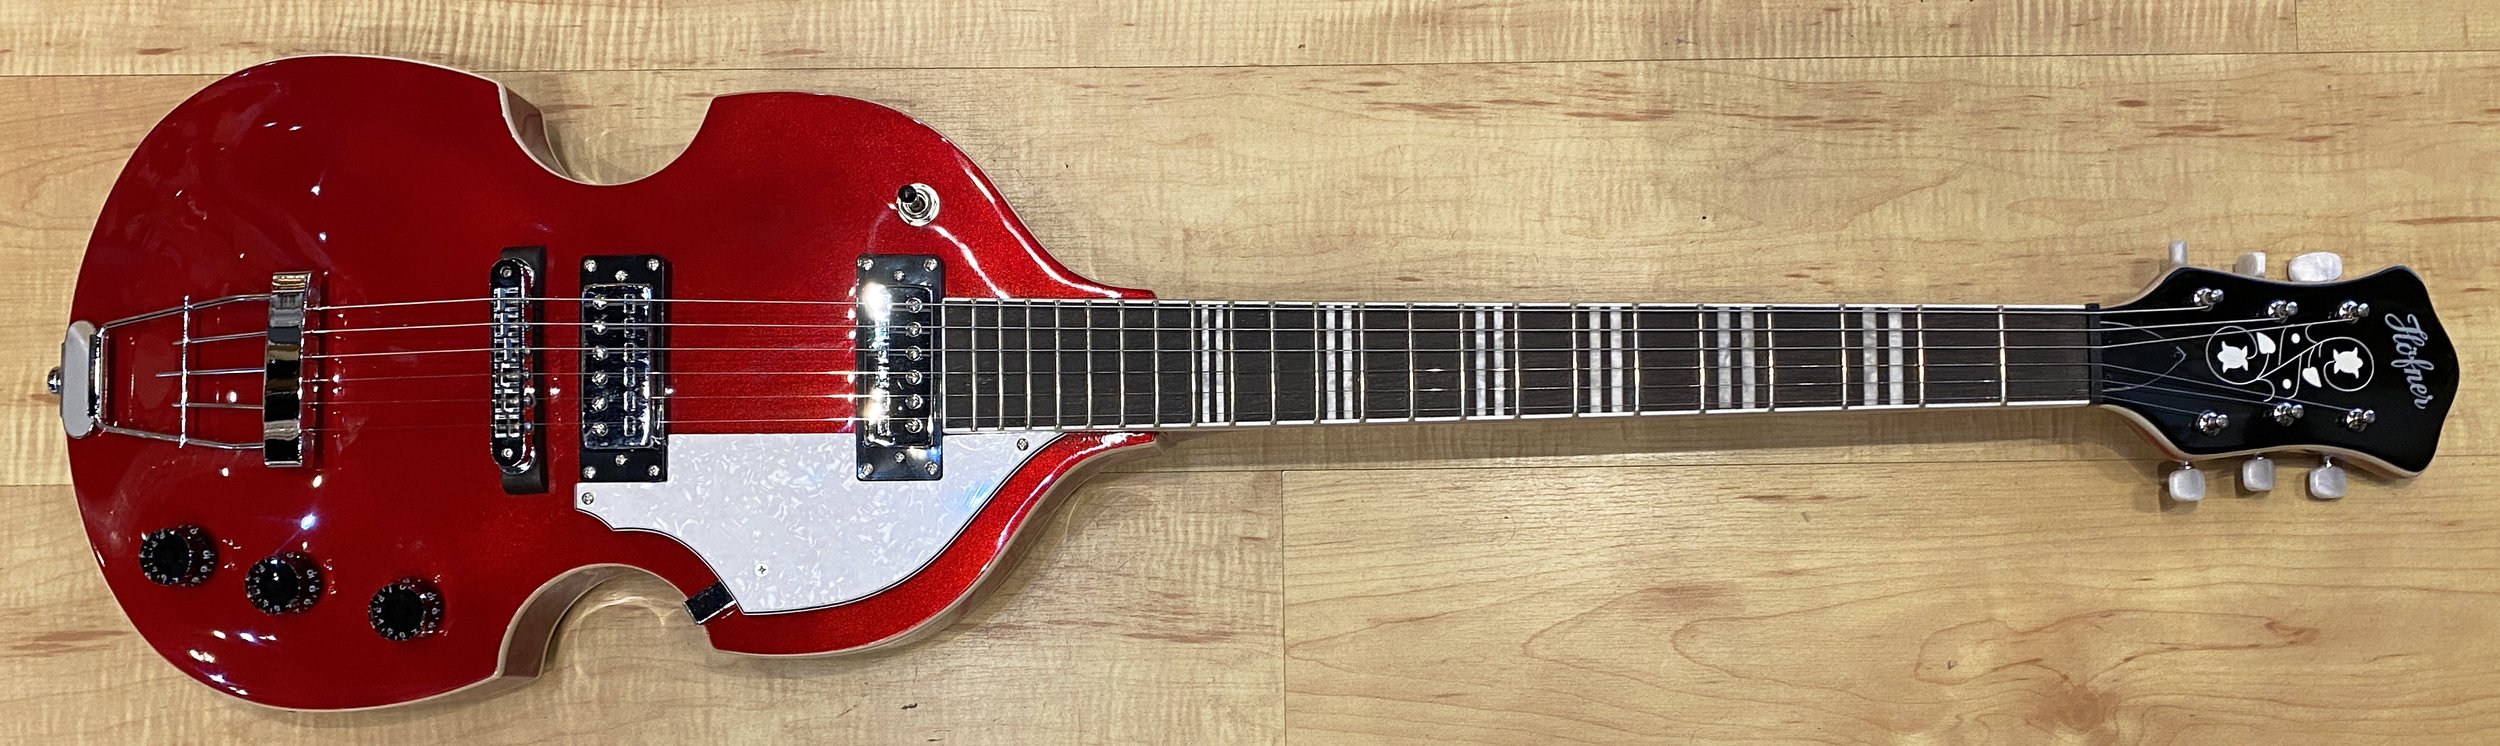 Hofner HI-459-PE-R Ignition Violin Guitar Red — Andy Babiuk's Fab Gear